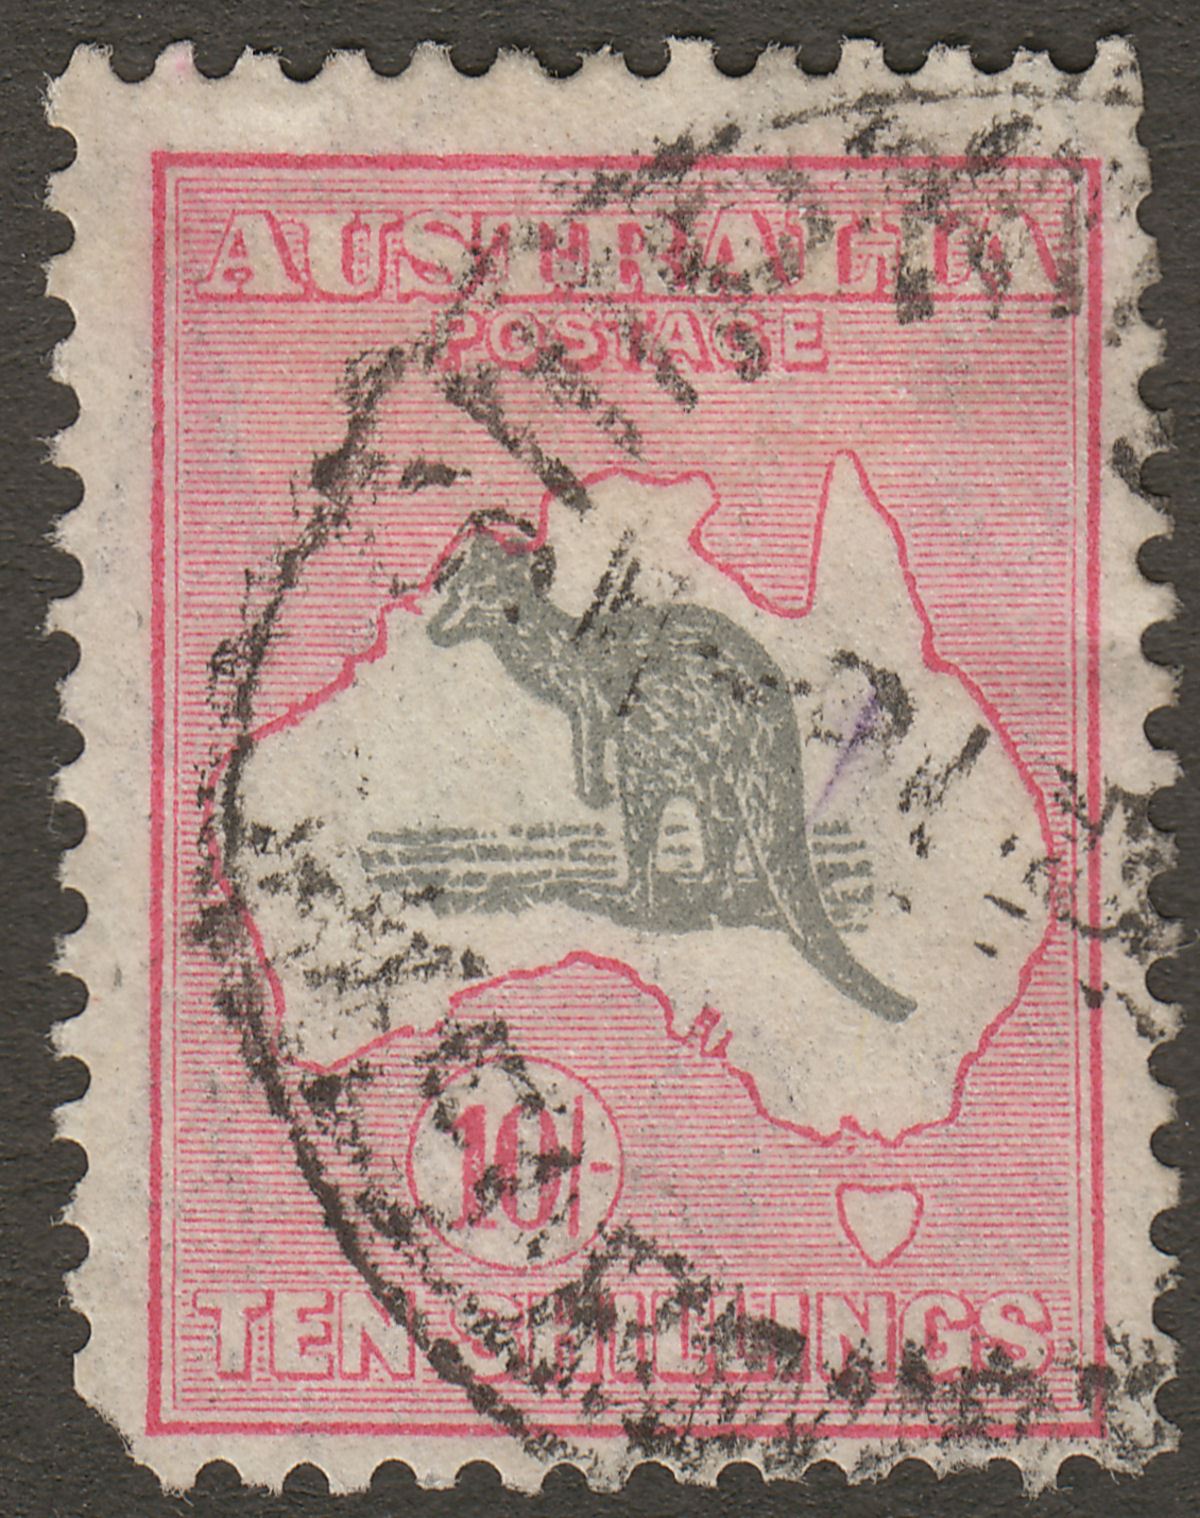 Australia 1932 KGV Roo 10sh Grey and Pink wmk CofA Used SG136 cat £150 short cor